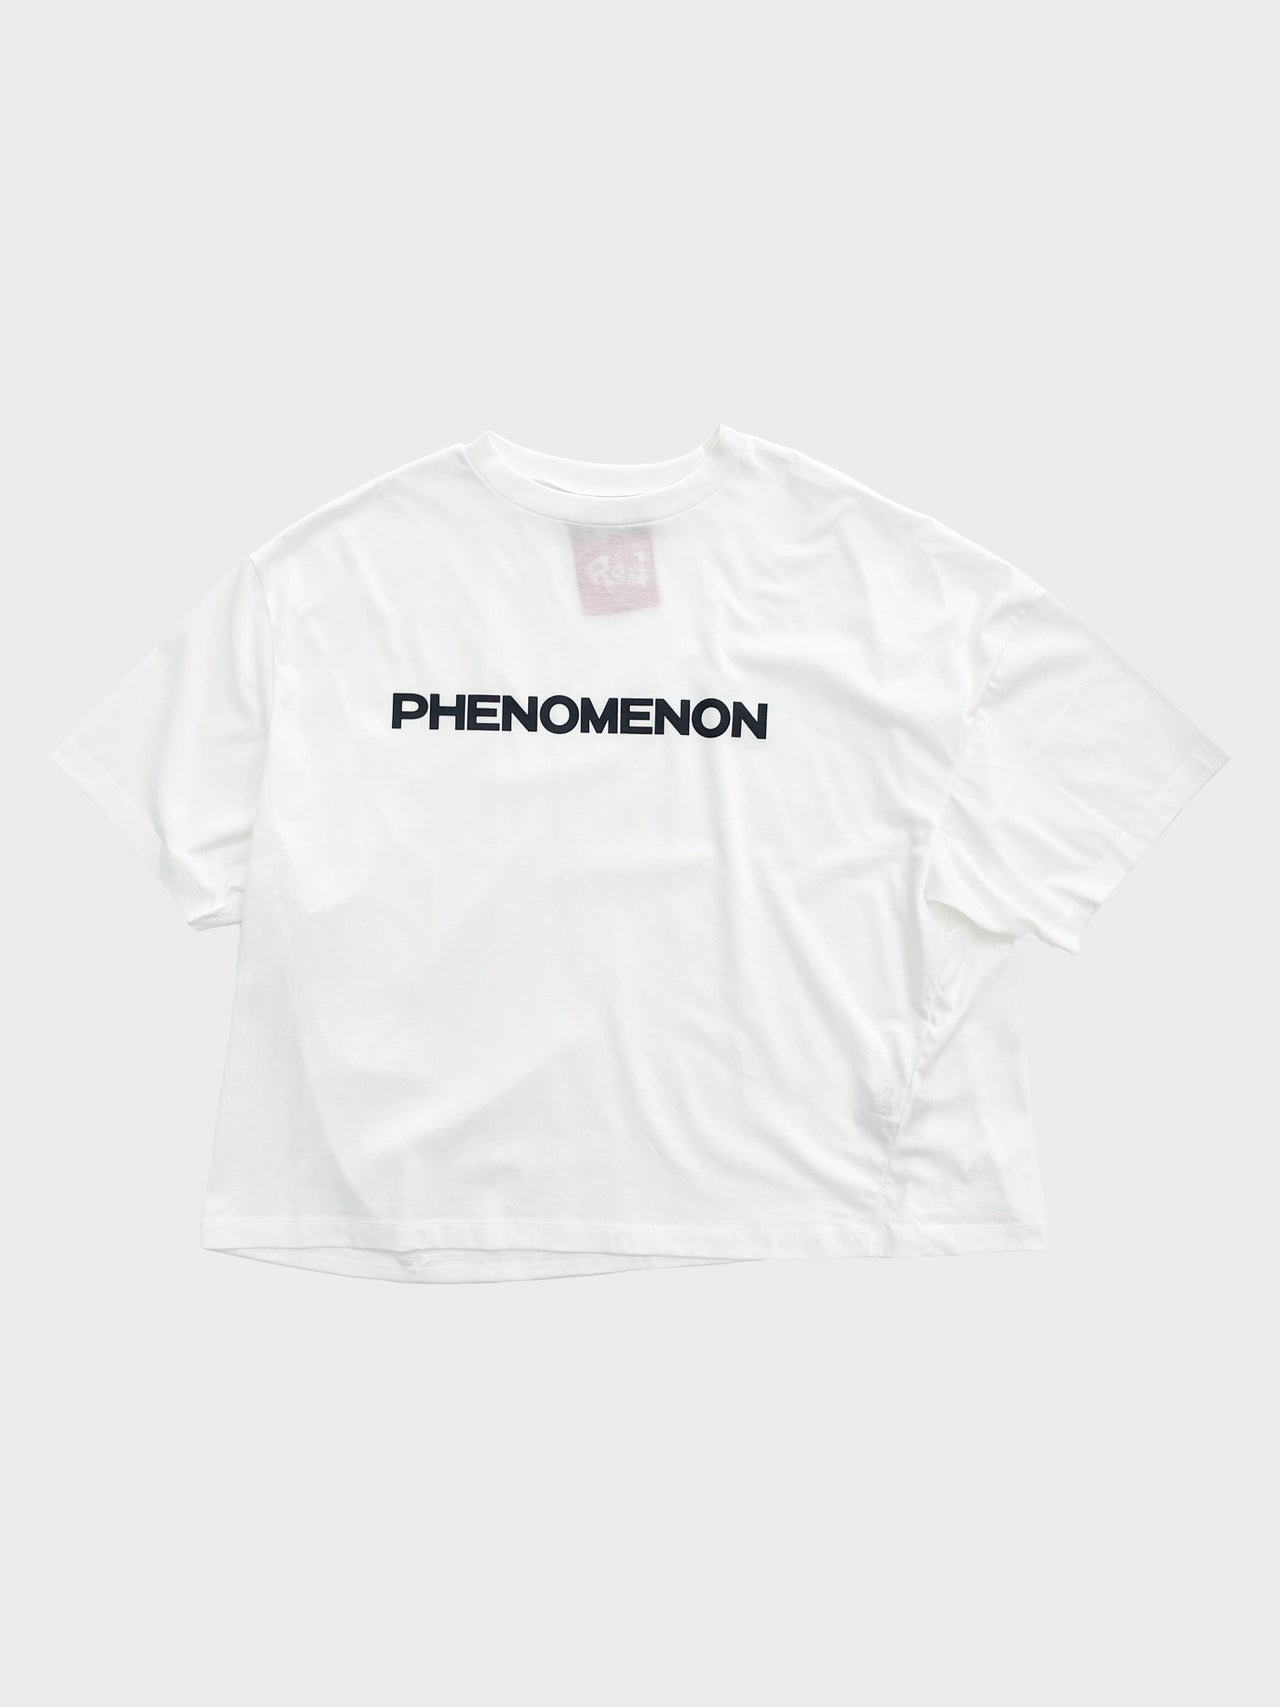 PHENOMENON by FUMITO GANRYU / GRAFFITI T-SHIRT(WHITE)